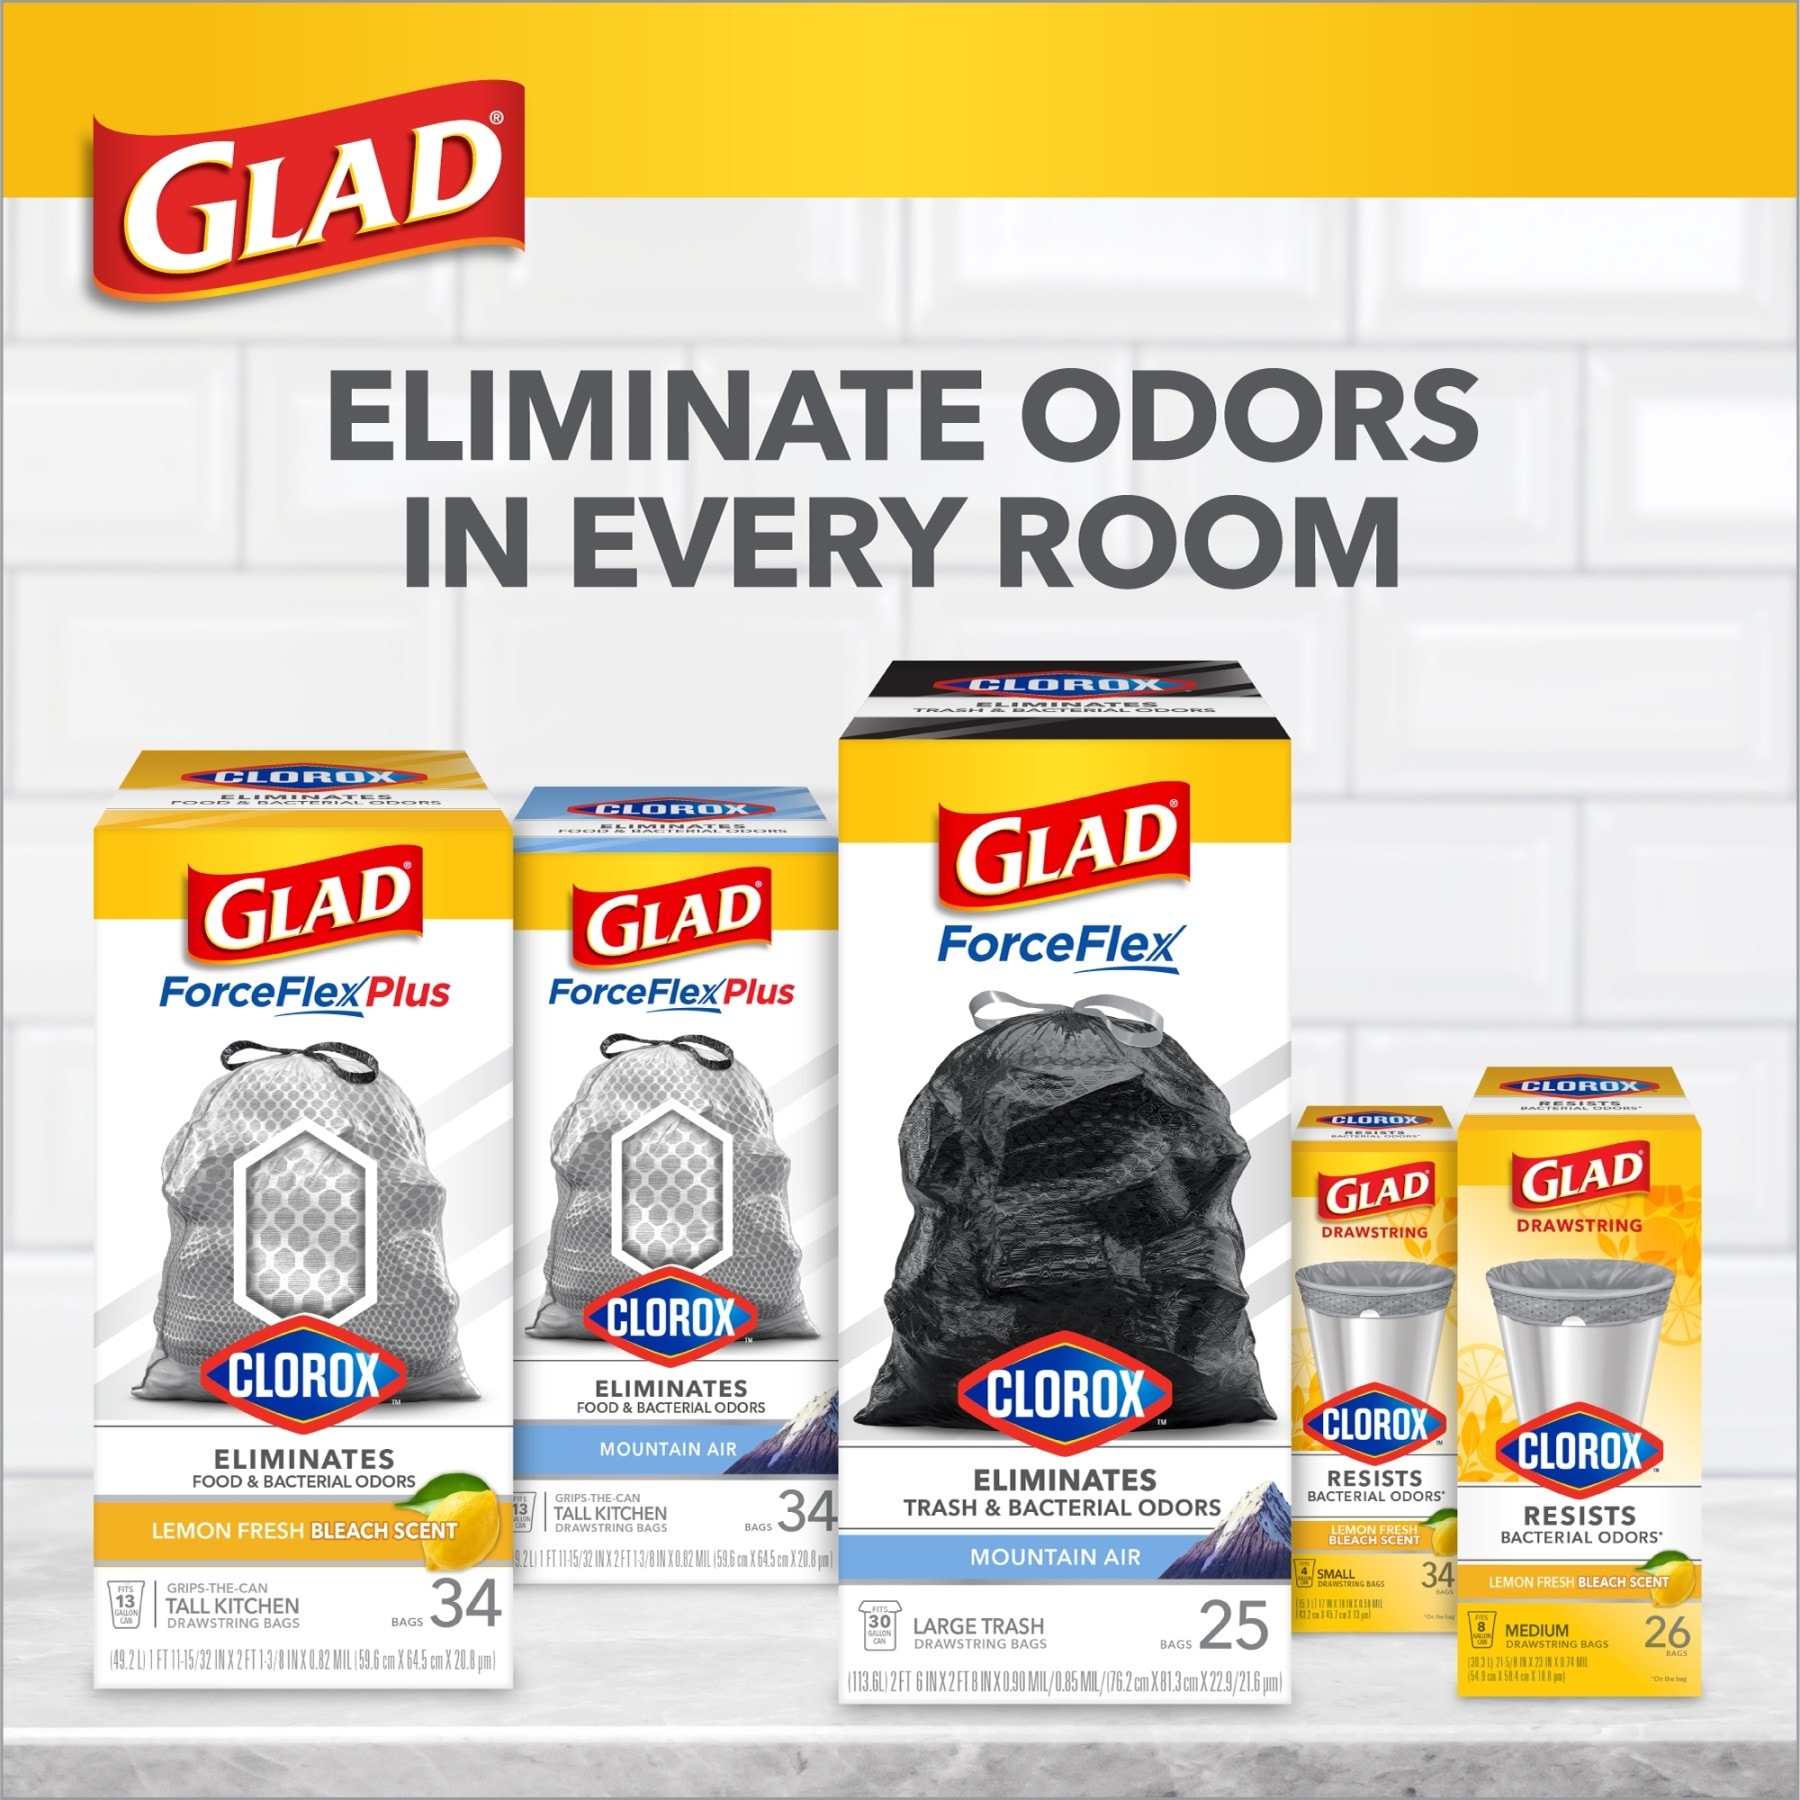 Glad with Clorox 8-Gallons Lemon Fresh Bleach Gray Plastic